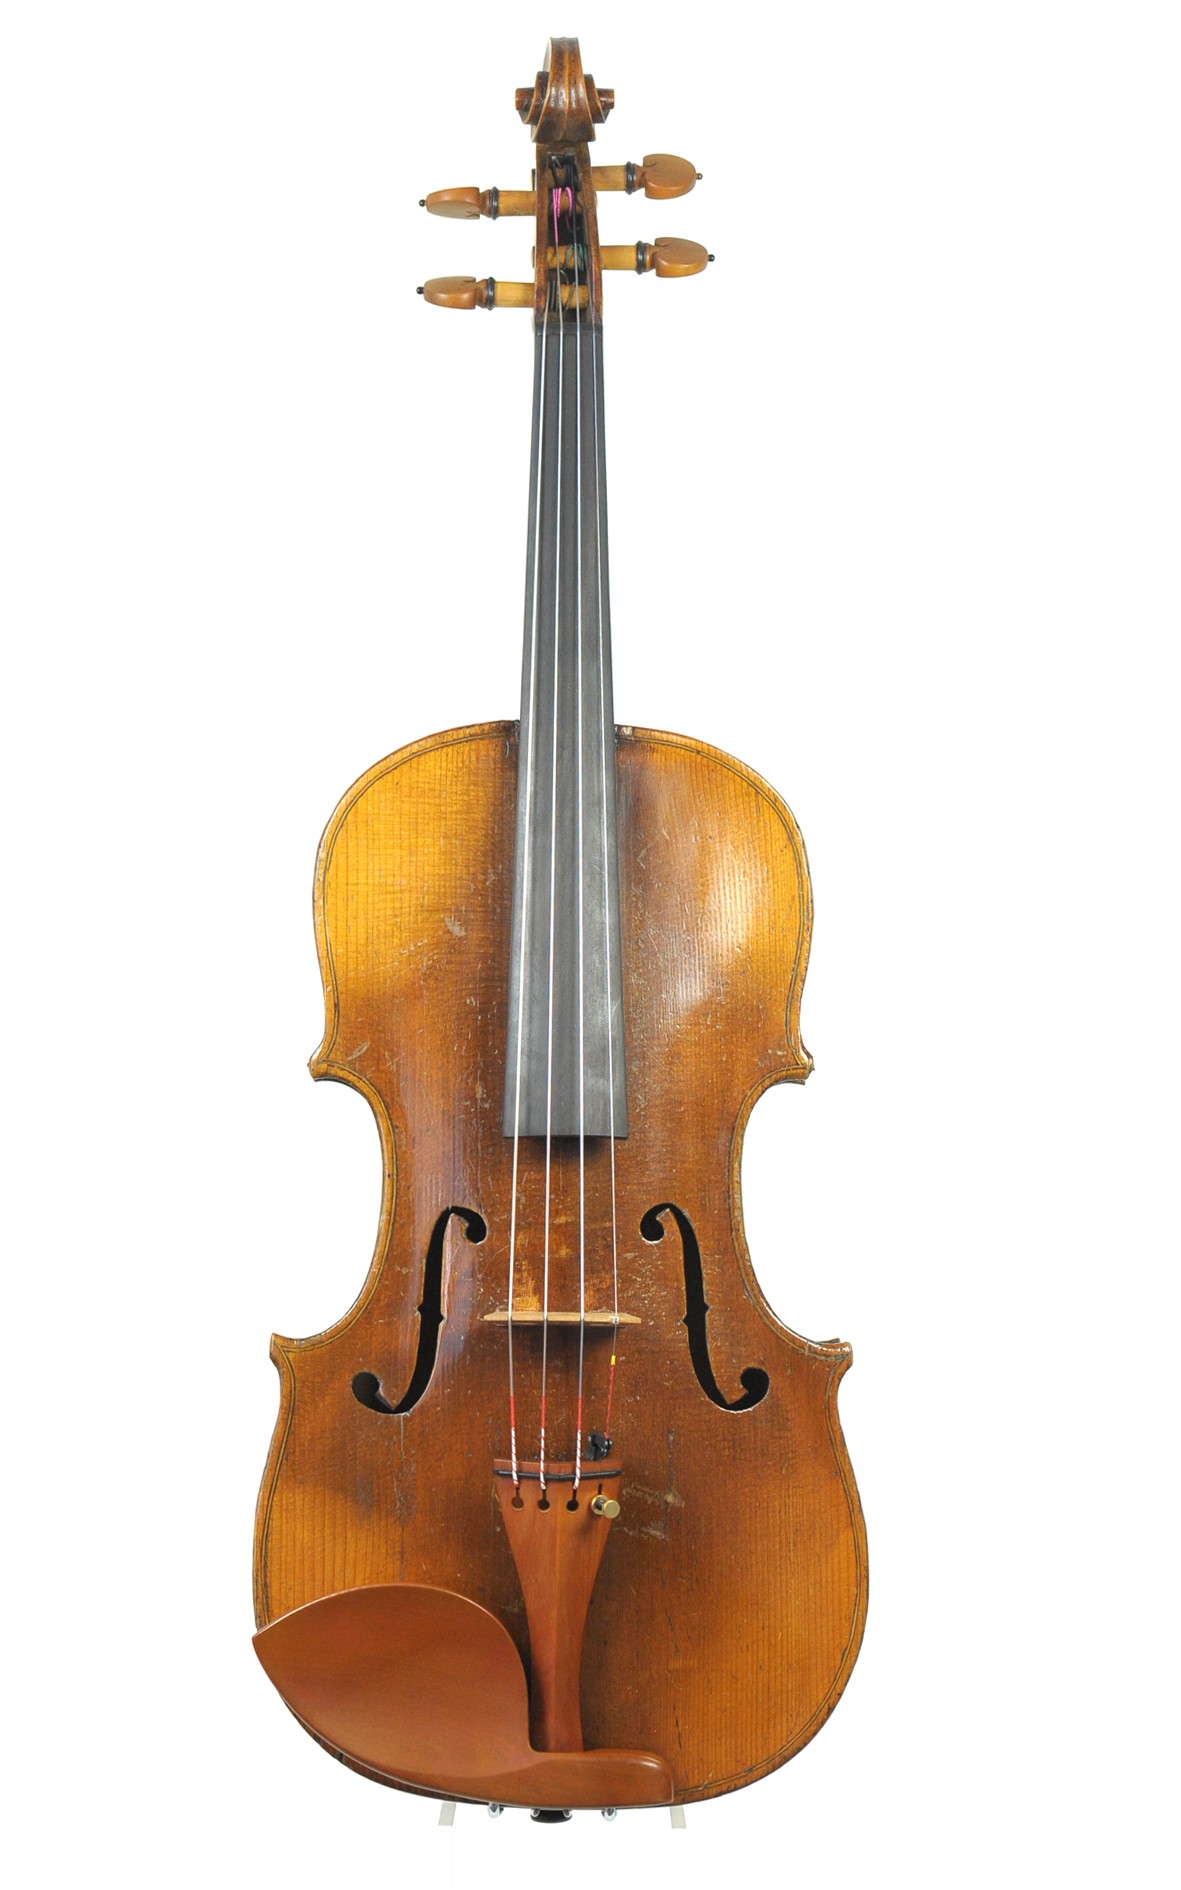 Antique Hopf violin of Klingenthal, approx. 1800 - spruce top